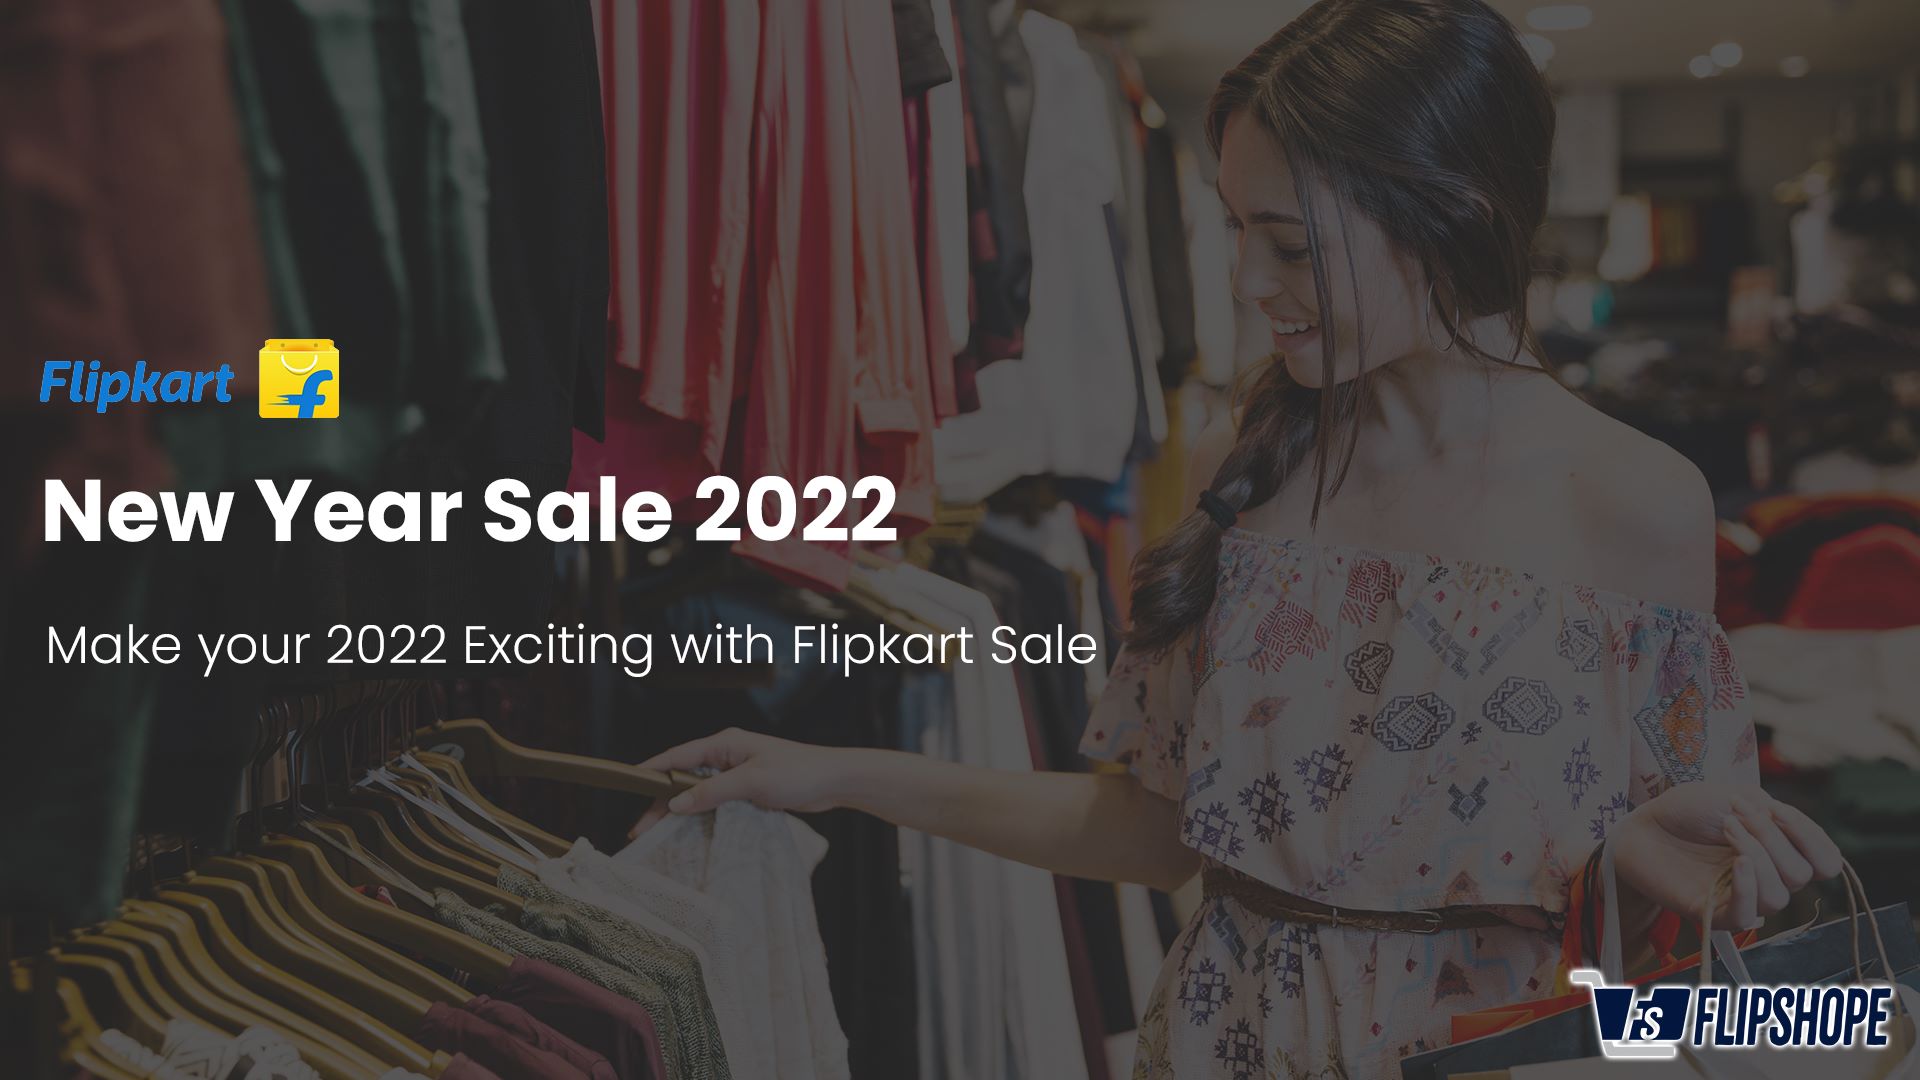 Flipkart New Year Sale 2022 exciting new deals